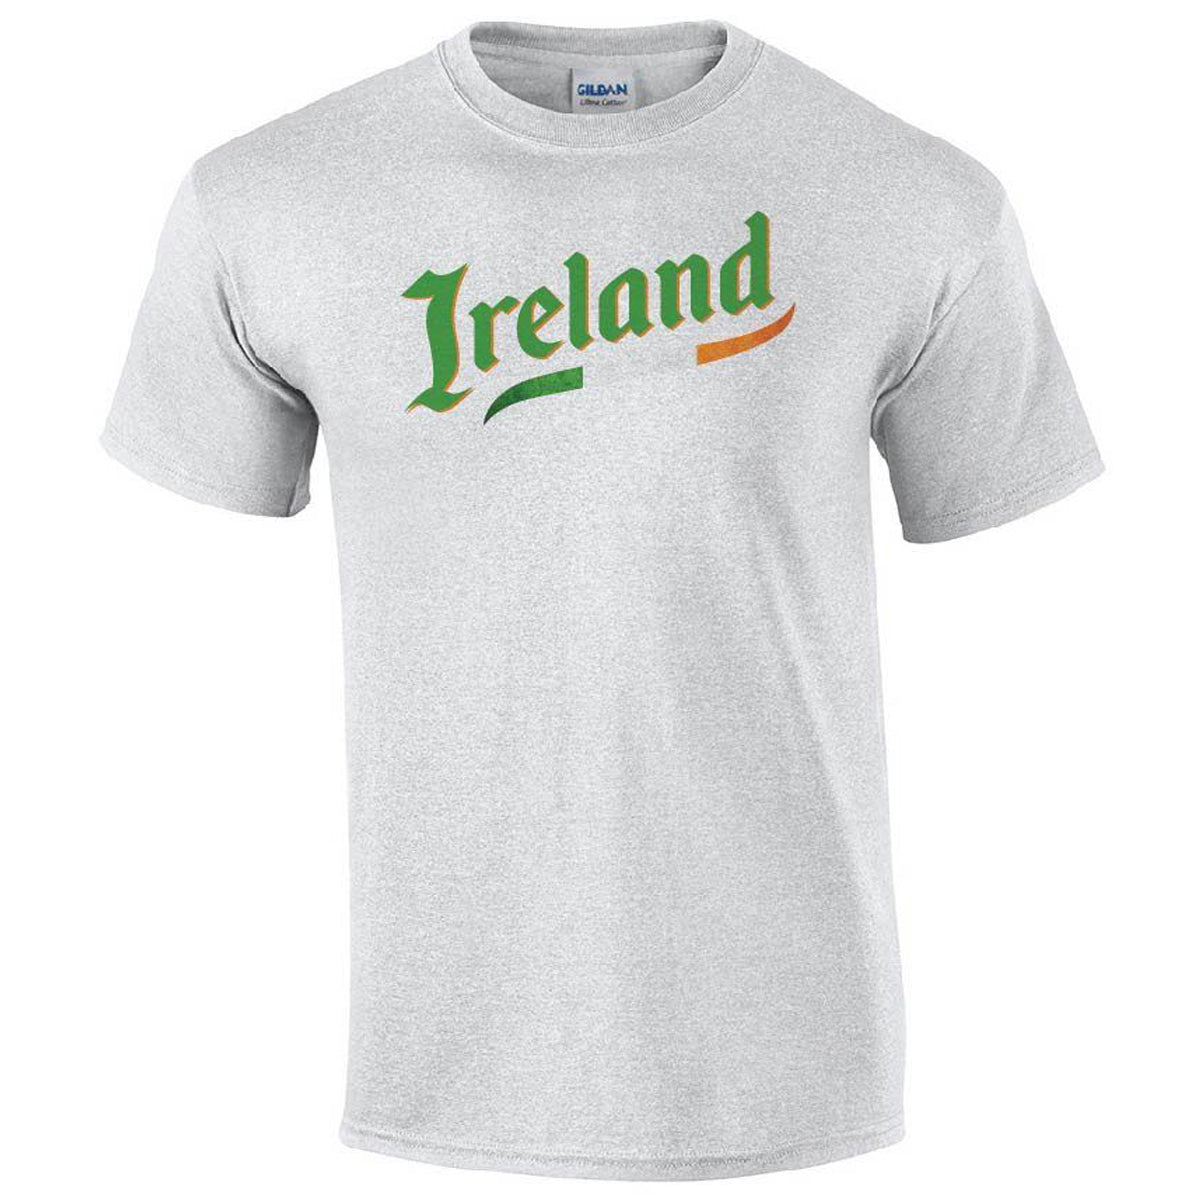 Ireland Script Printed Tee T-shirts 411 Youth Medium Ash Youth